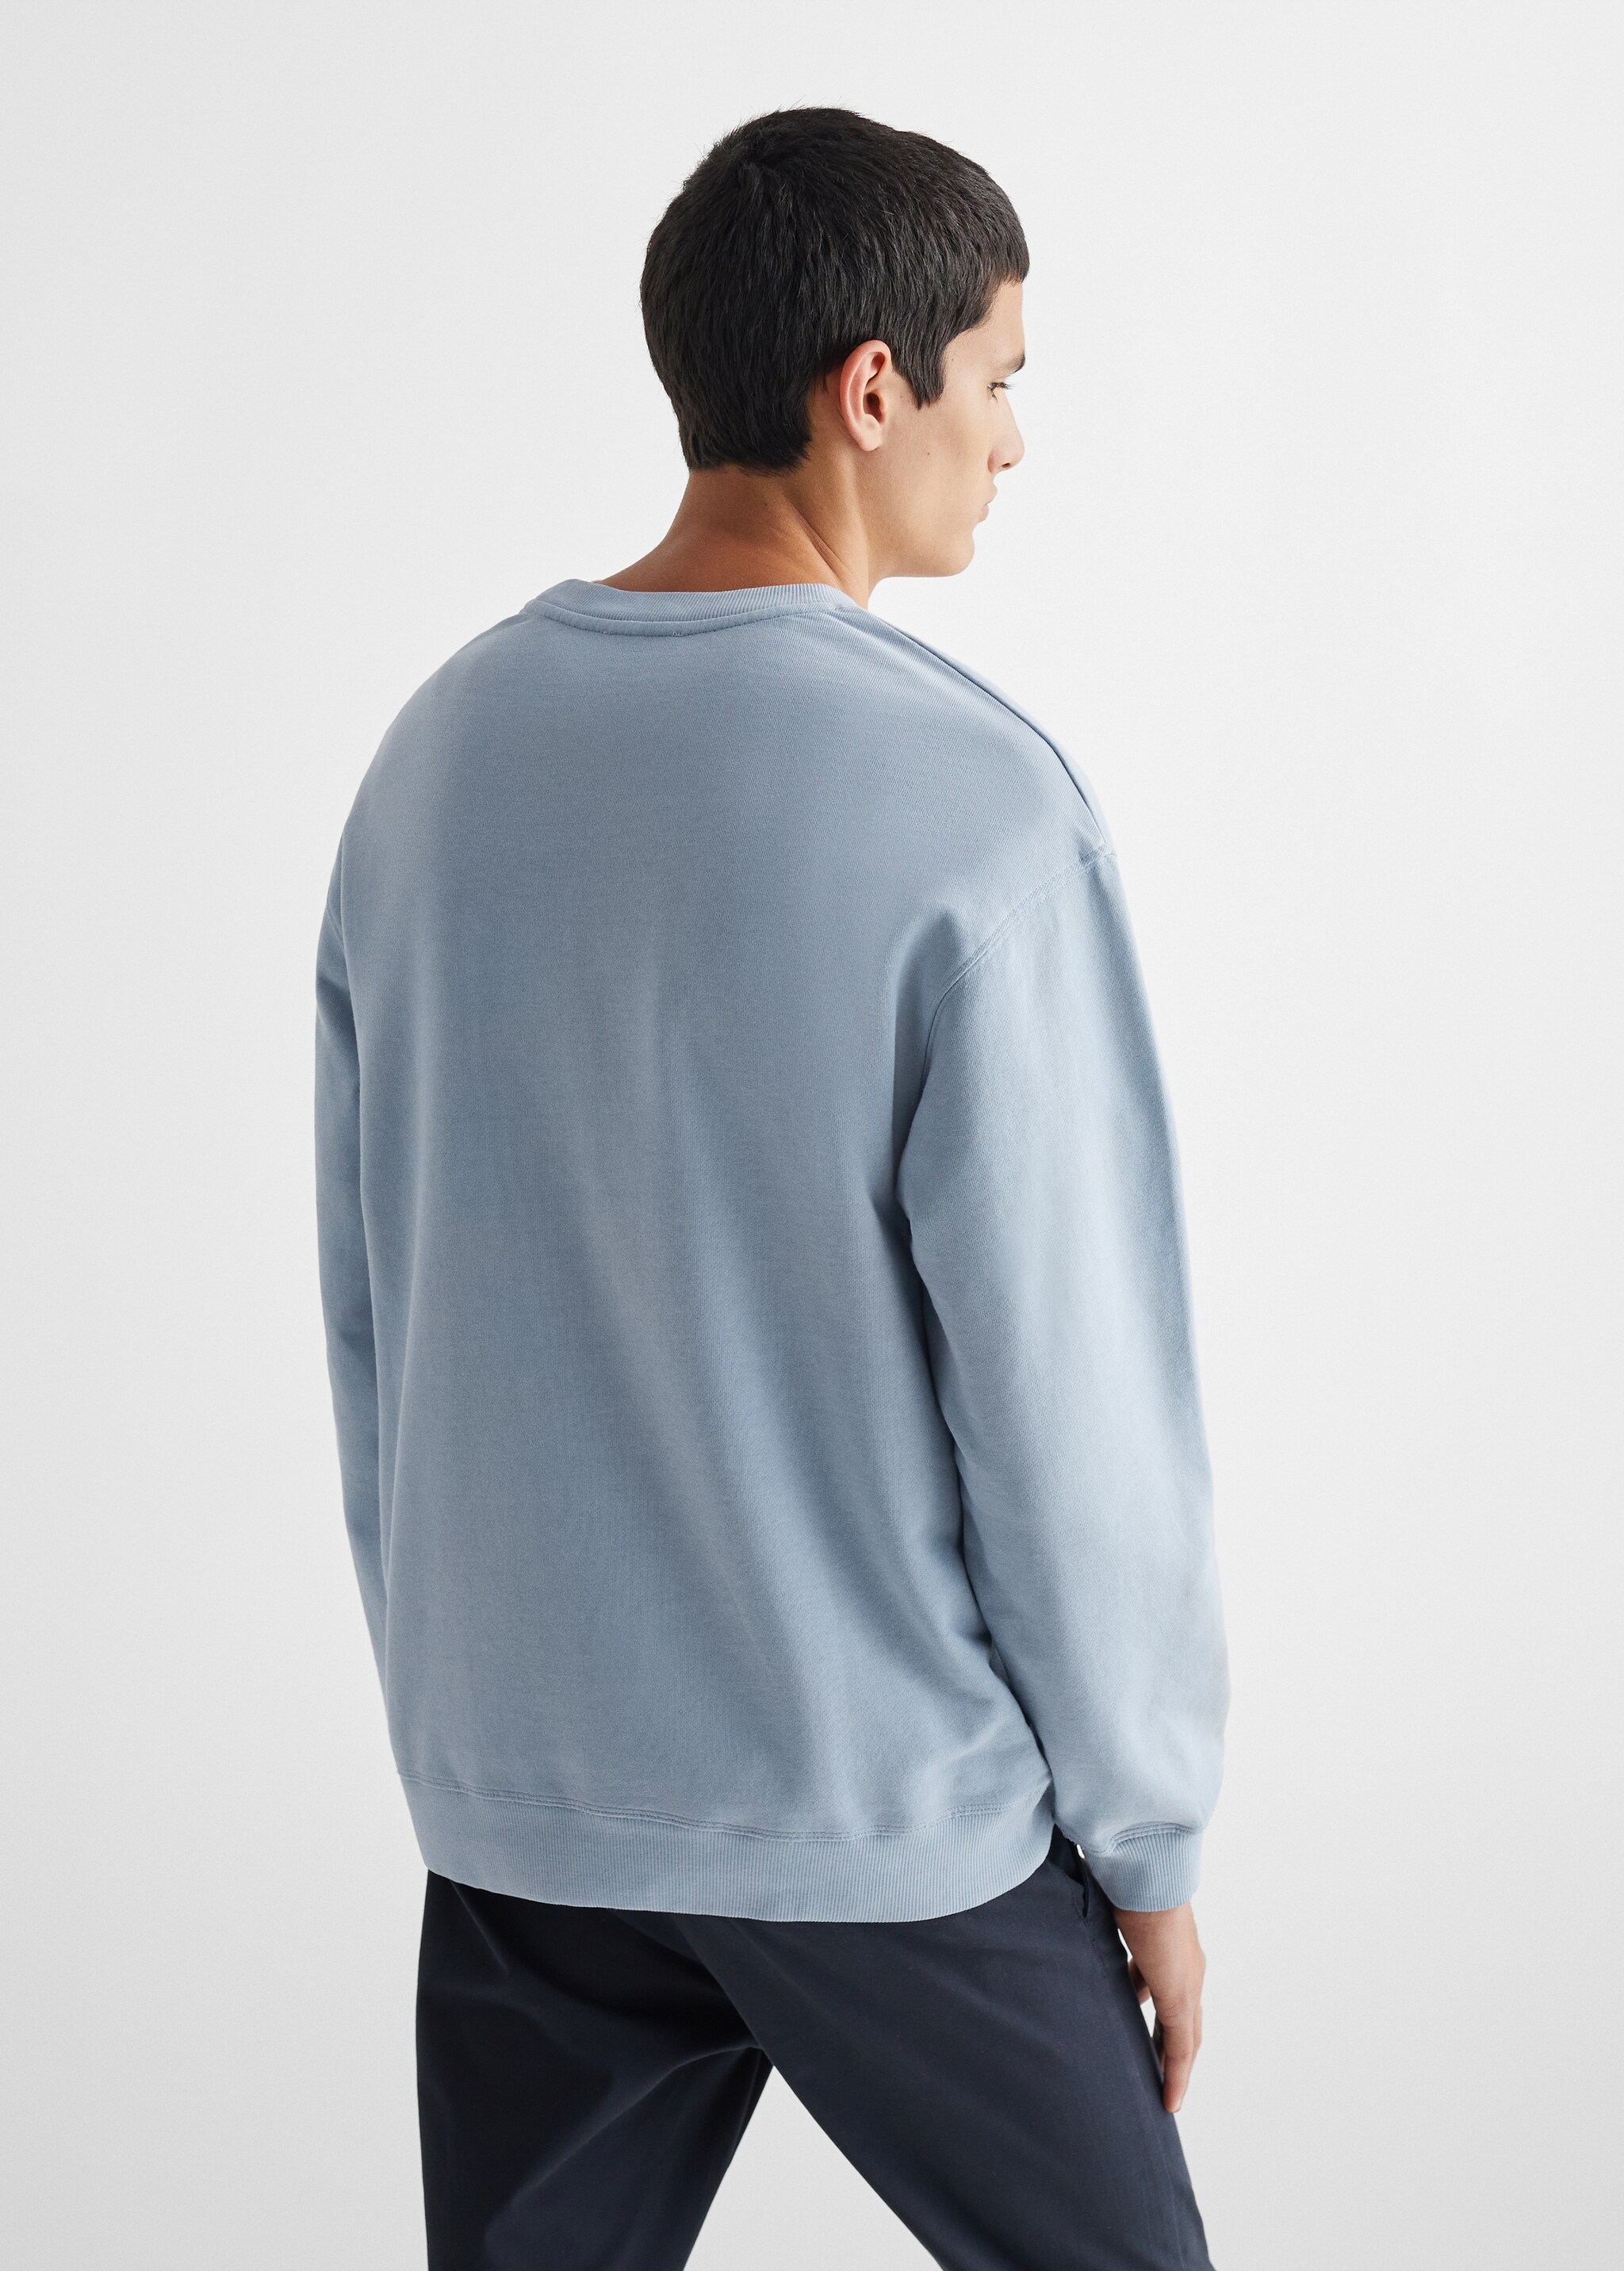 Cotton sweatshirt - Reverse of the article